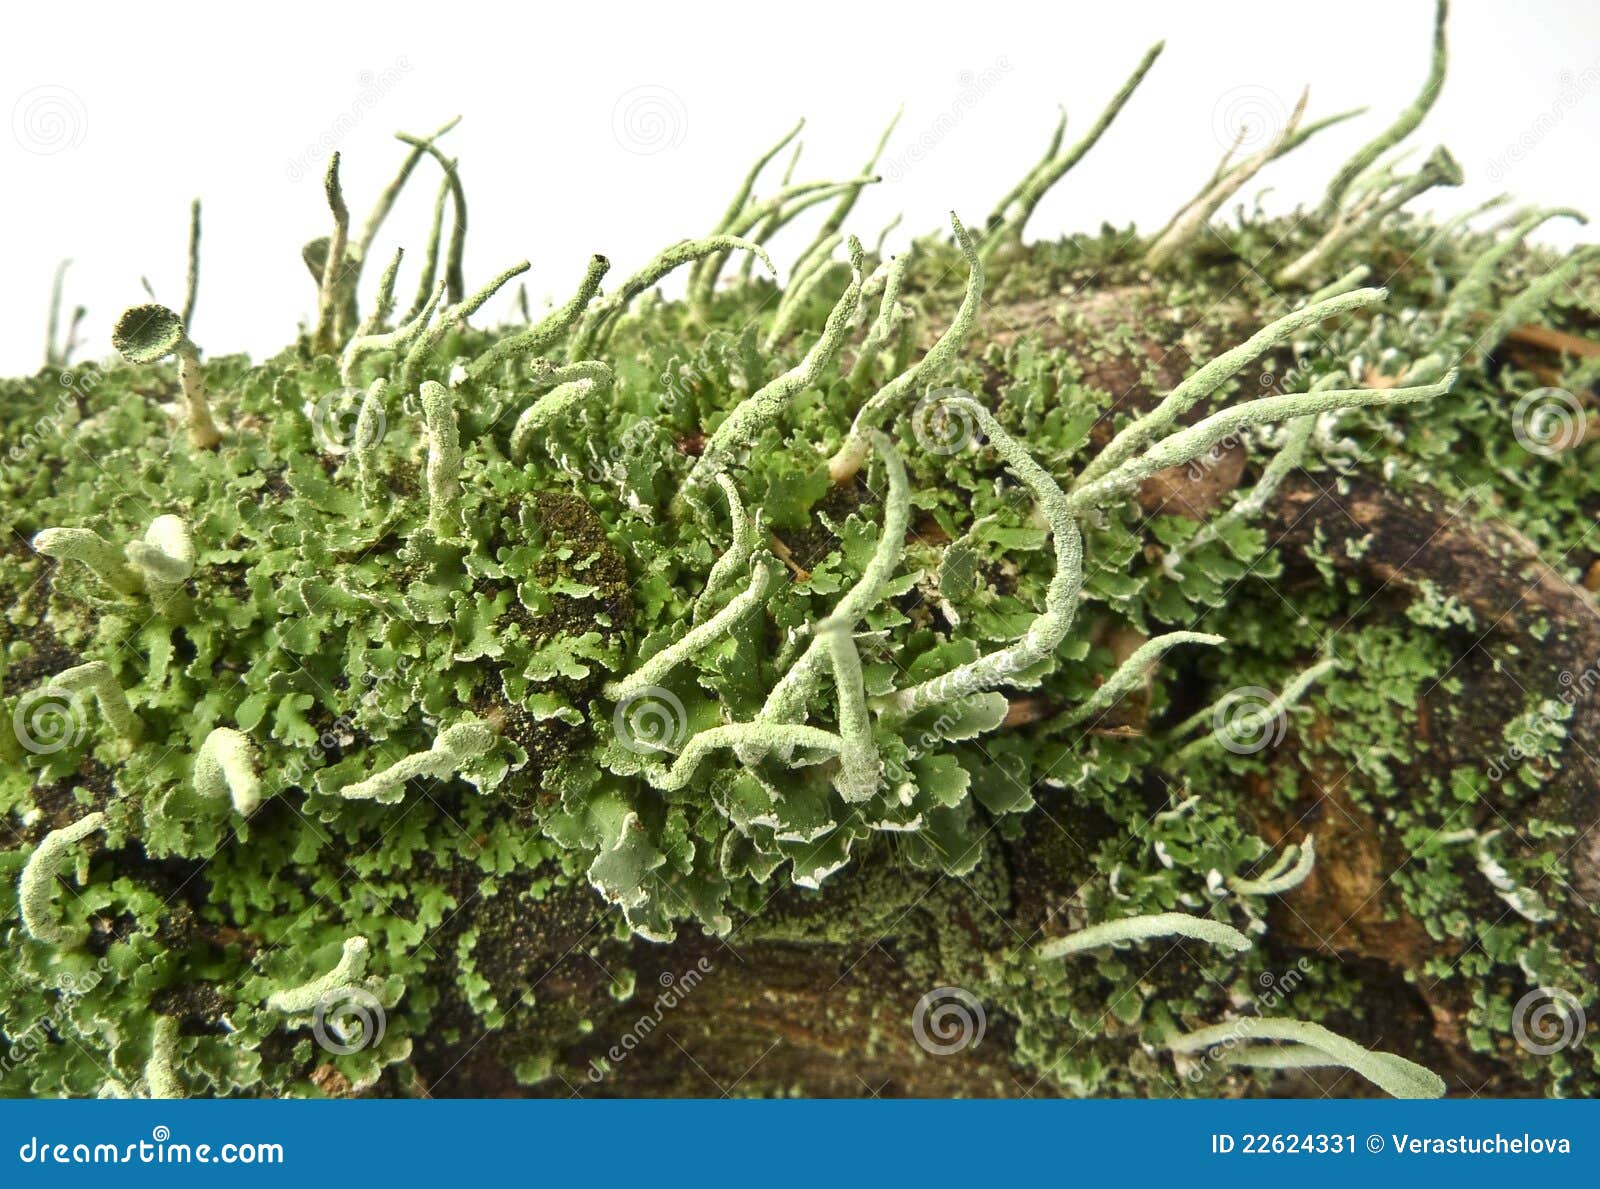 lichen cladonia